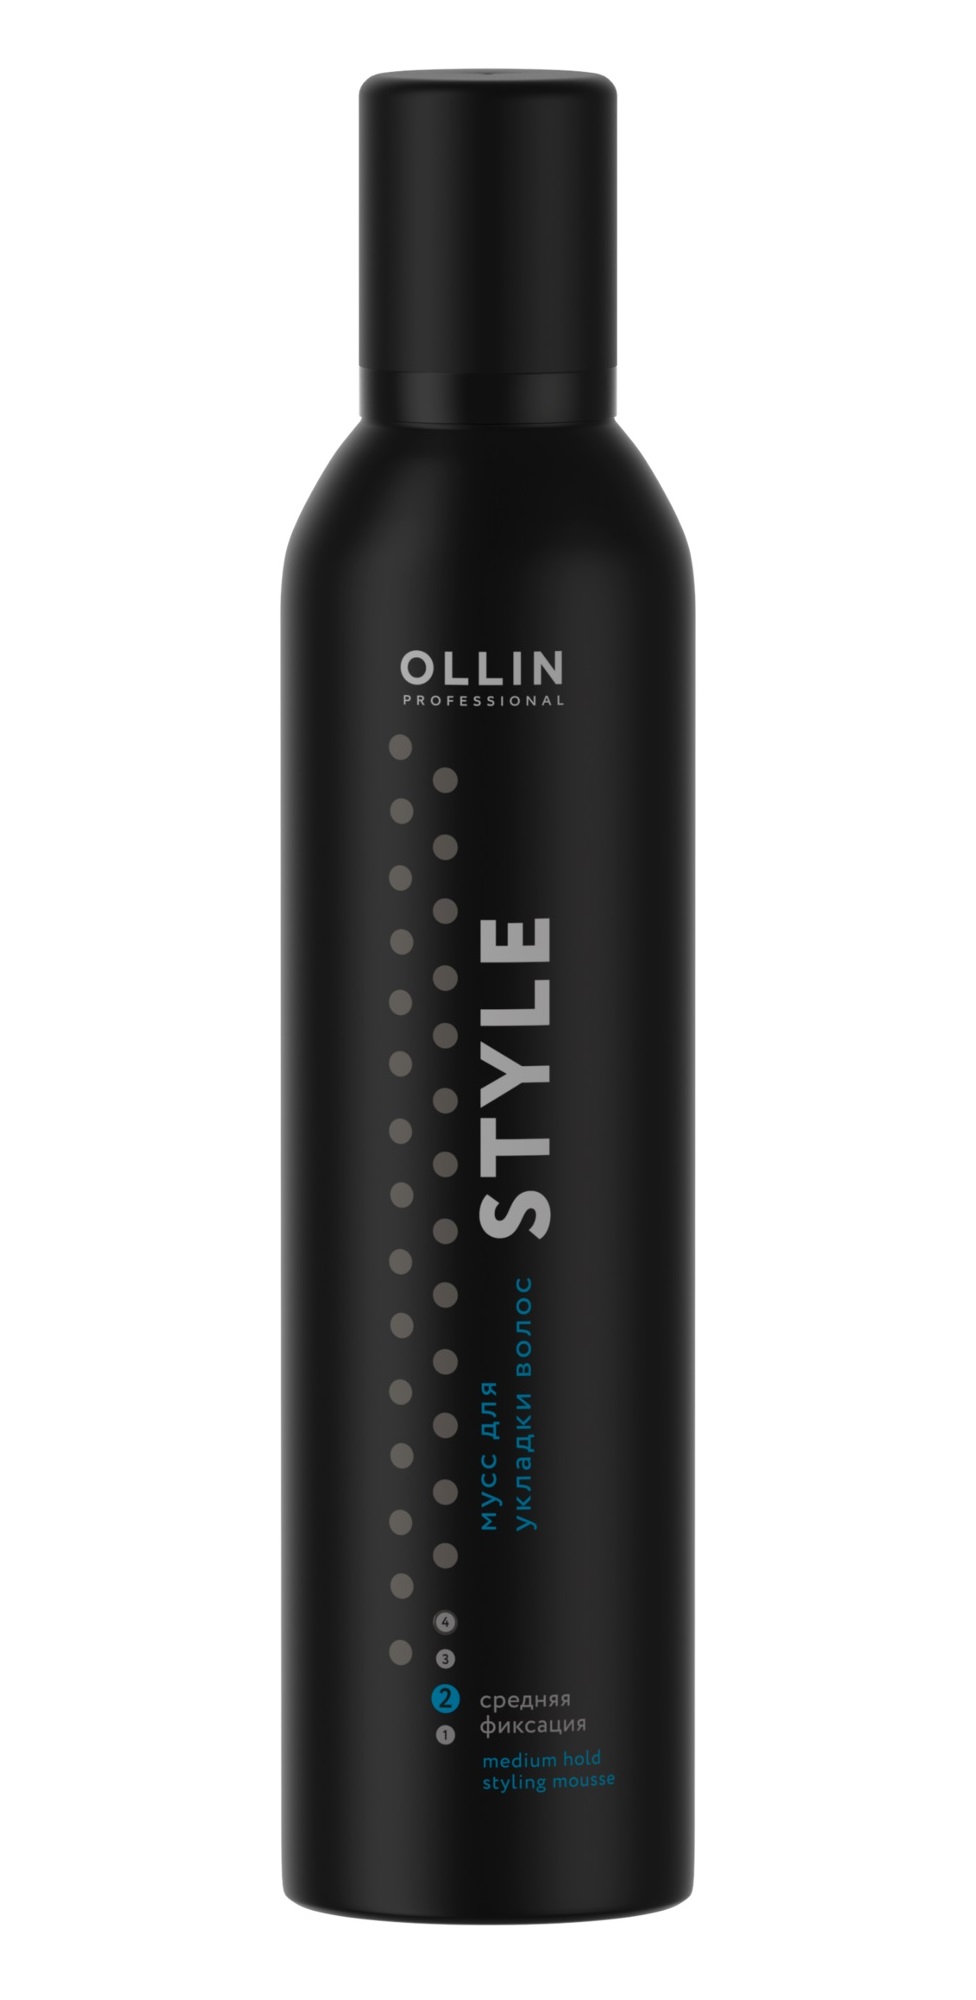 Ollin Professional Мусс для укладки волос средней фиксации, 250 мл (Ollin Professional, Style) лосьон спрей для укладки средней фиксации ollin professional style 250 мл